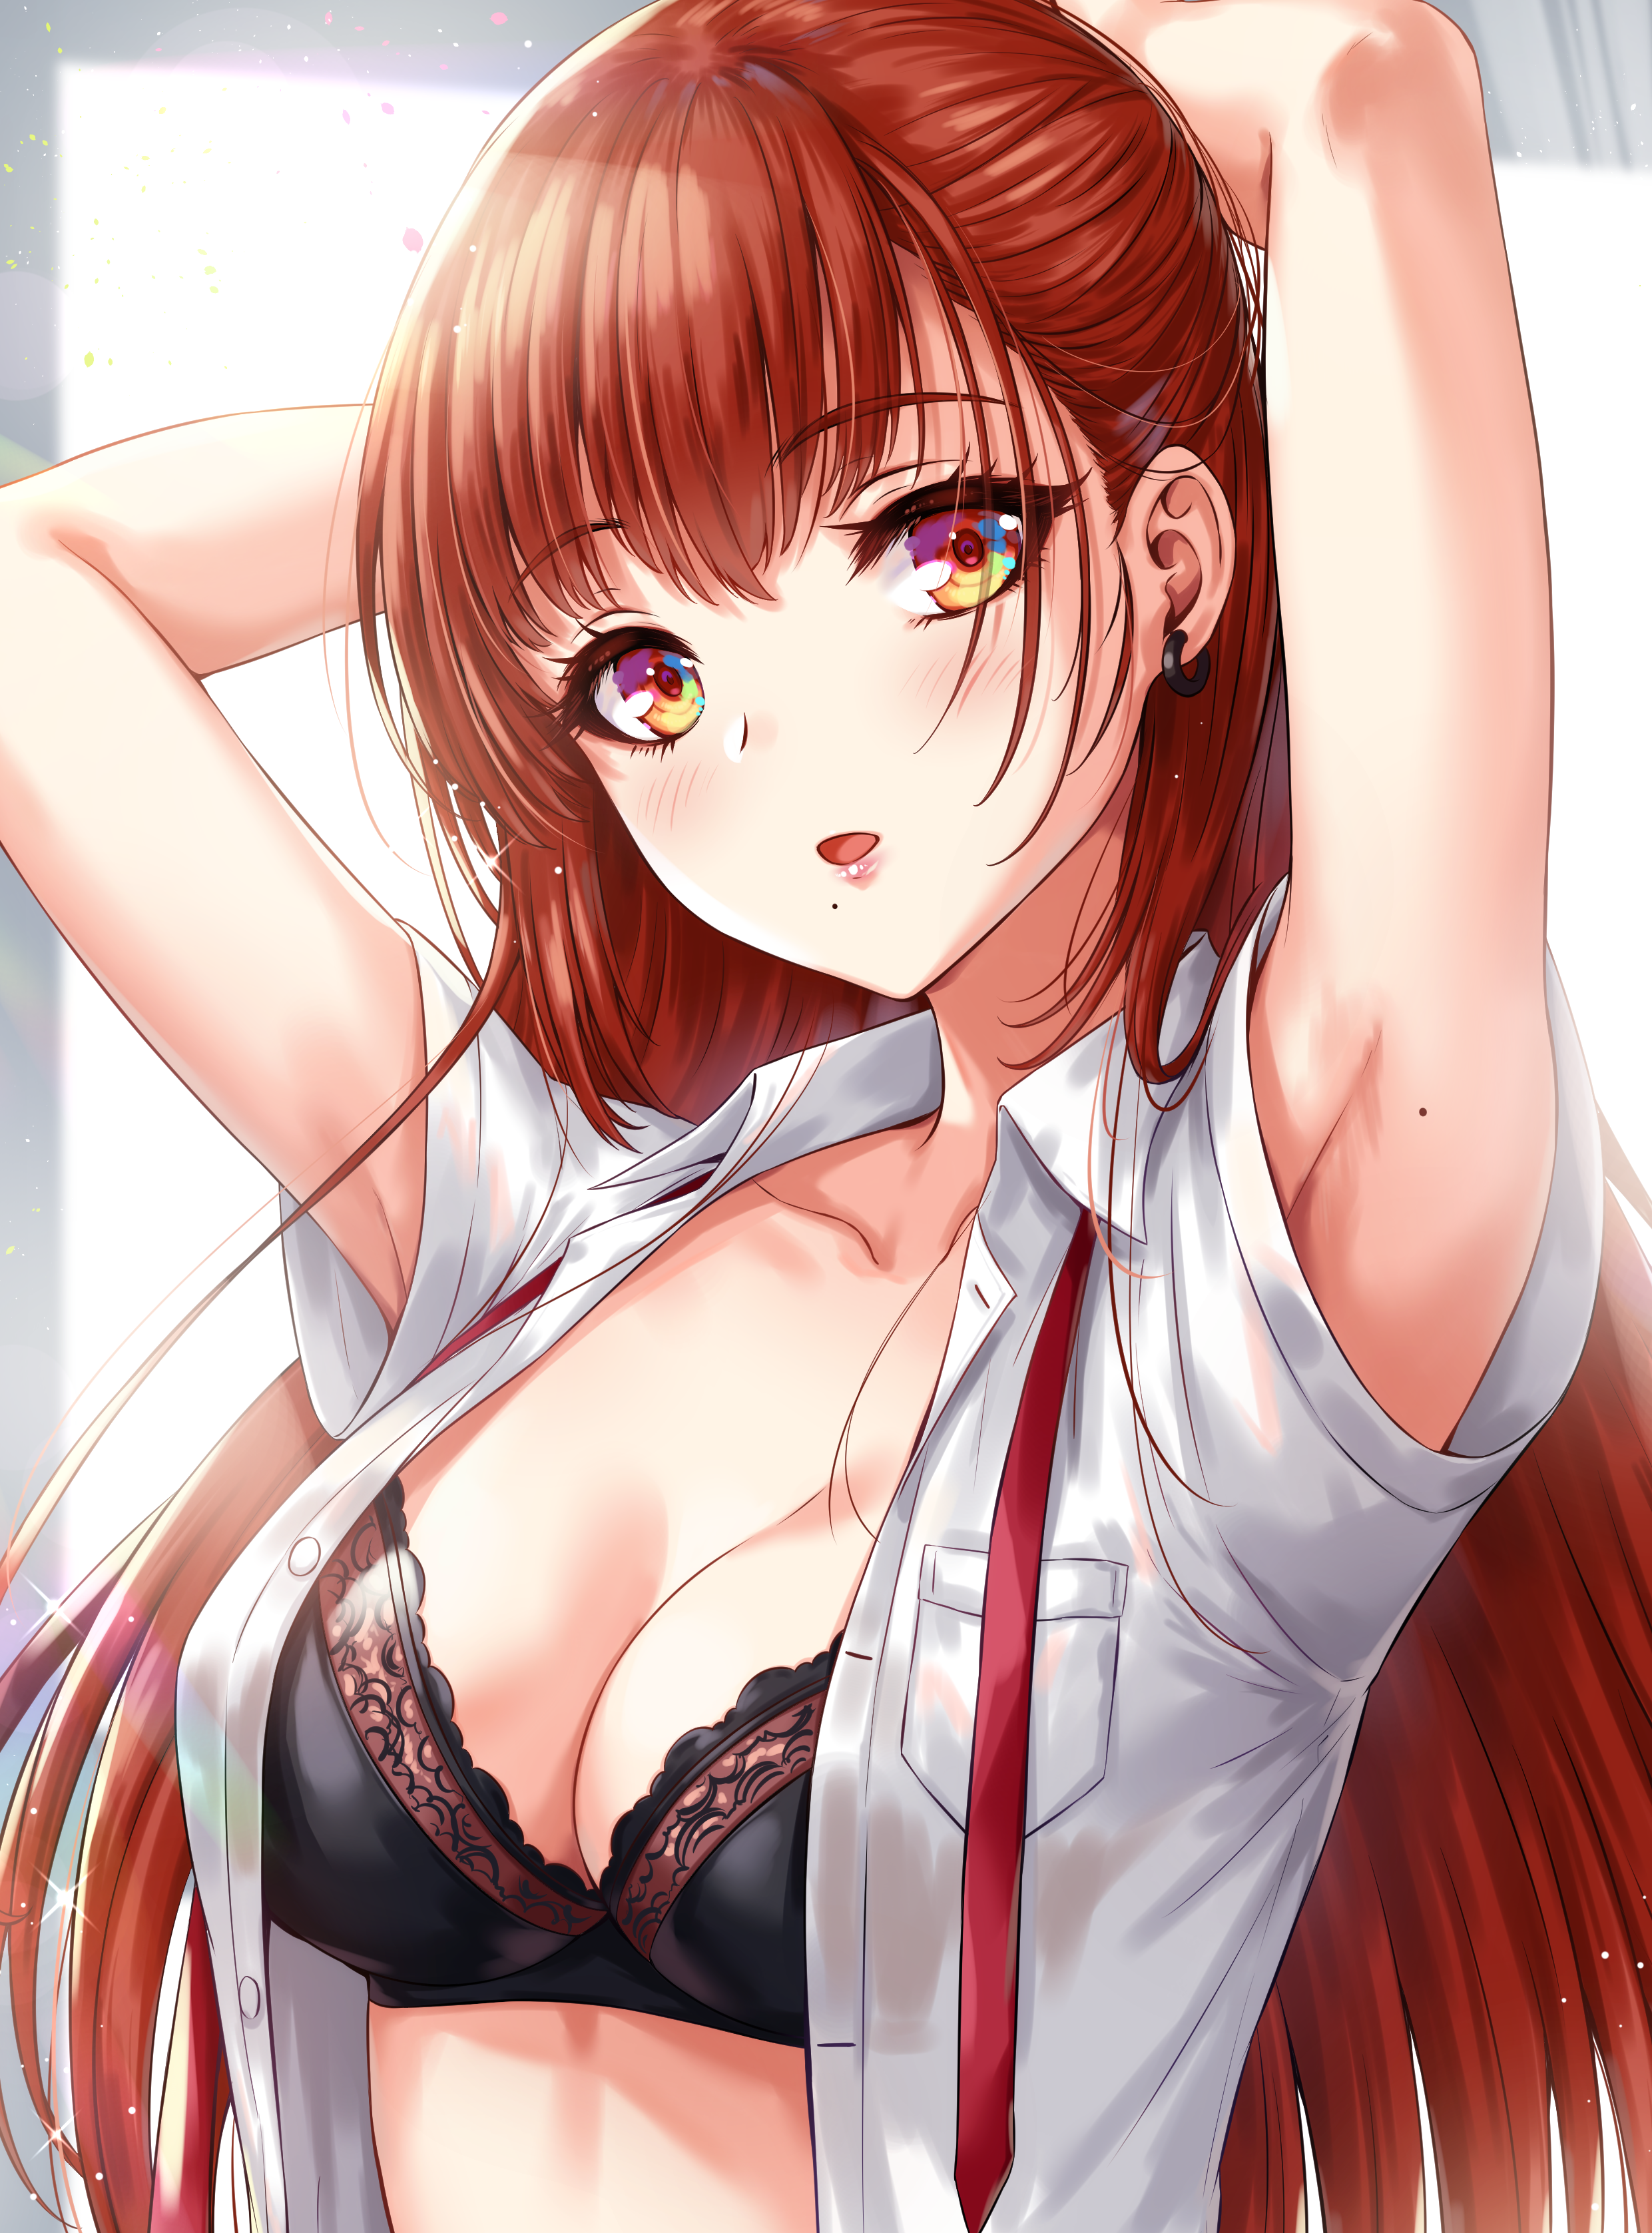 Anime 2481x3353 anime anime girls digital art artwork 2D portrait display black bras redhead arms up open shirt cleavage sakiyamama